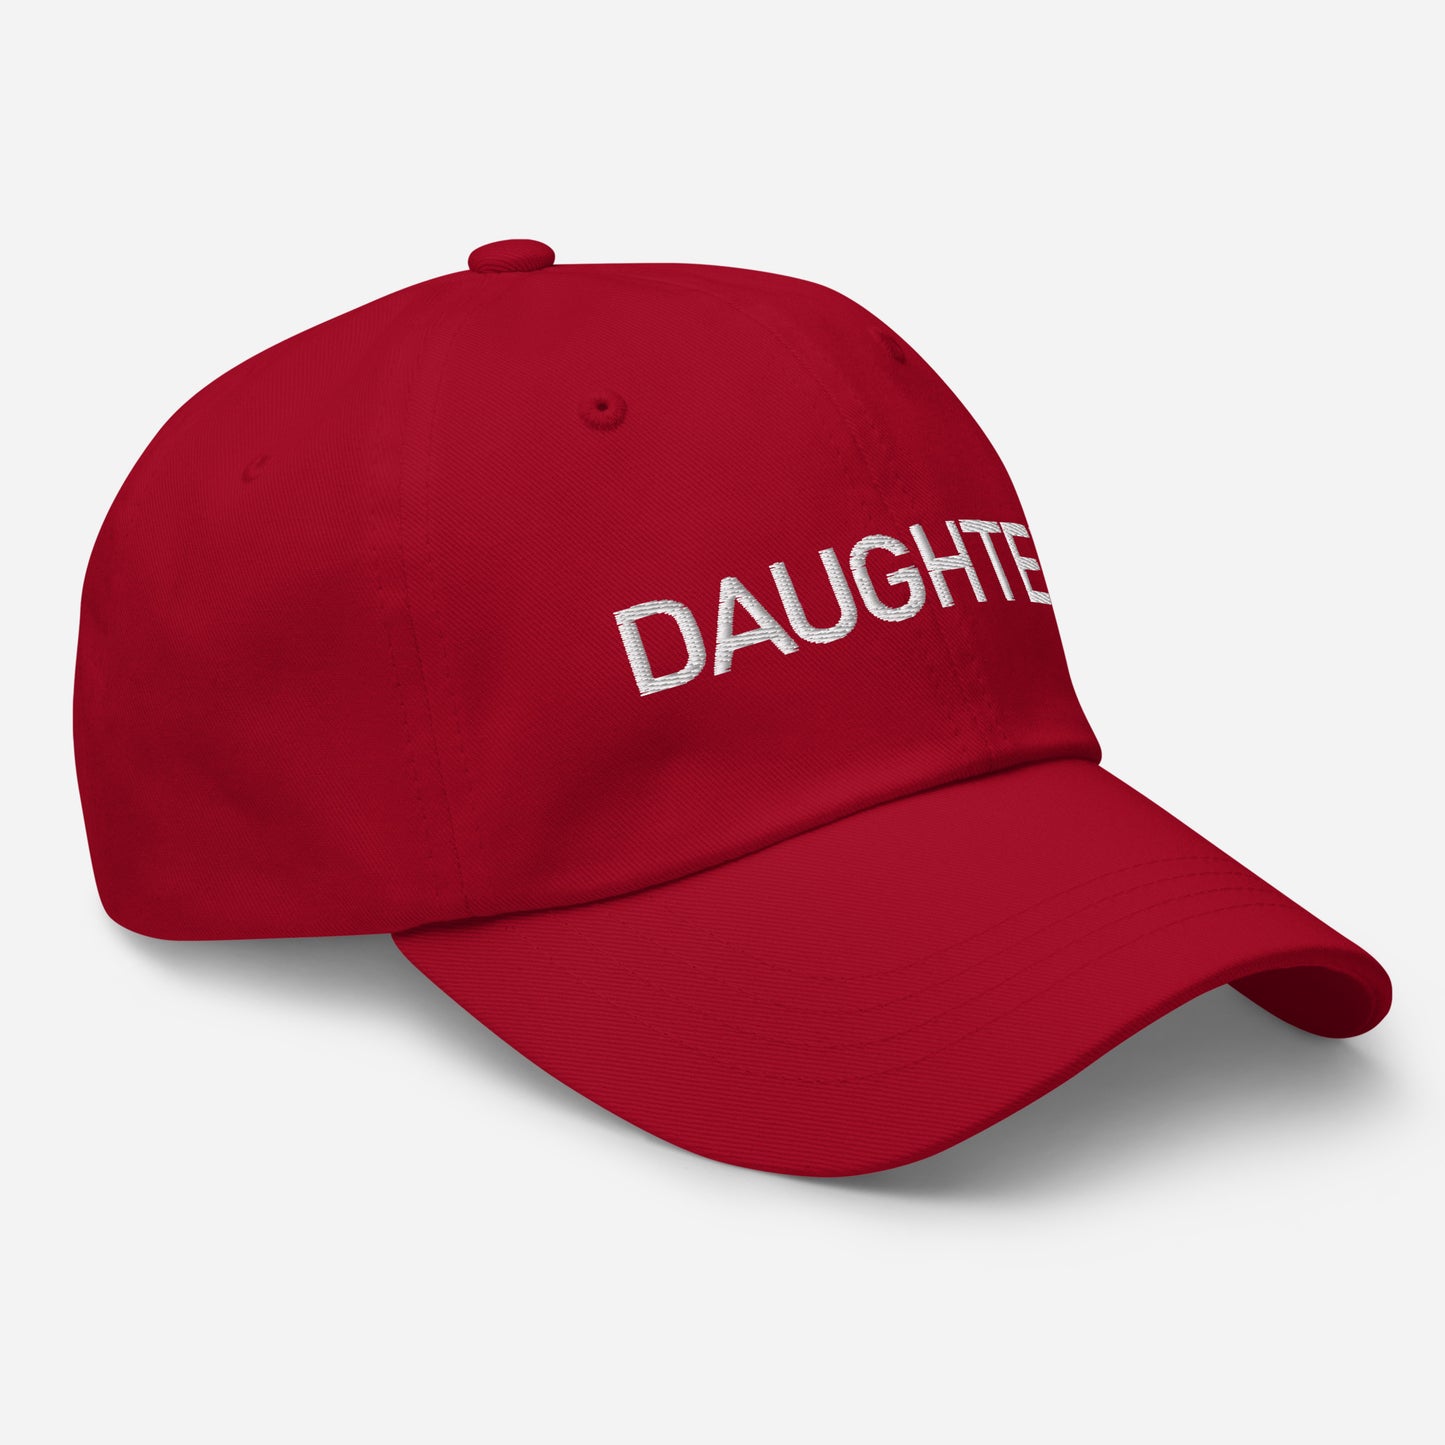 Daughter - Sustainably Made Baseball Cap